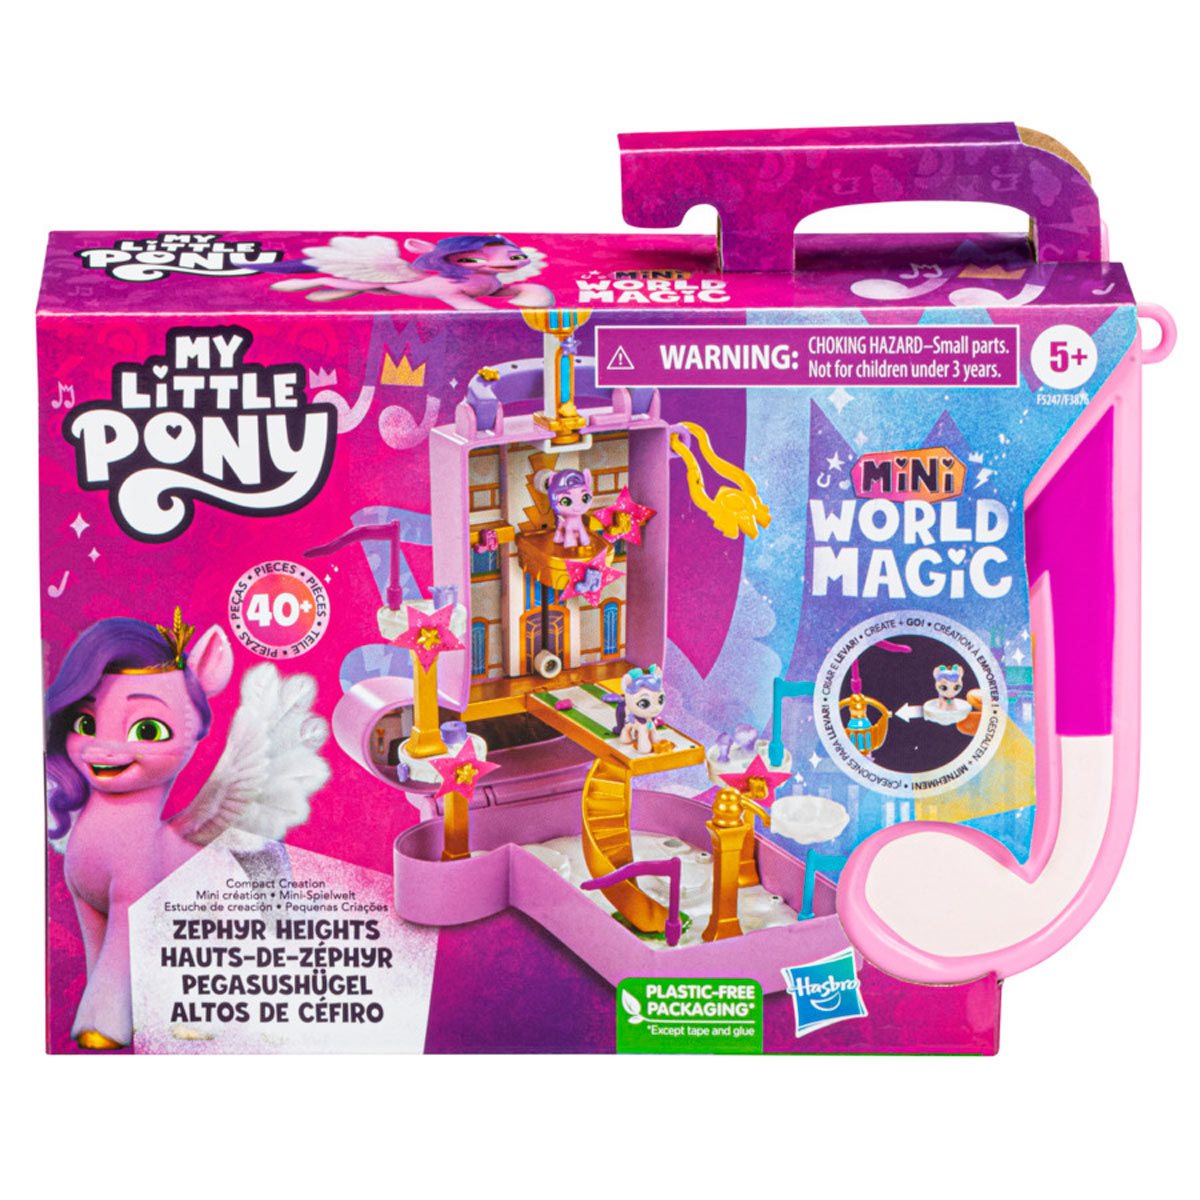 My Little Pony Toys Mini World Magic Critter Corner Compact Creation  Playset - My Little Pony